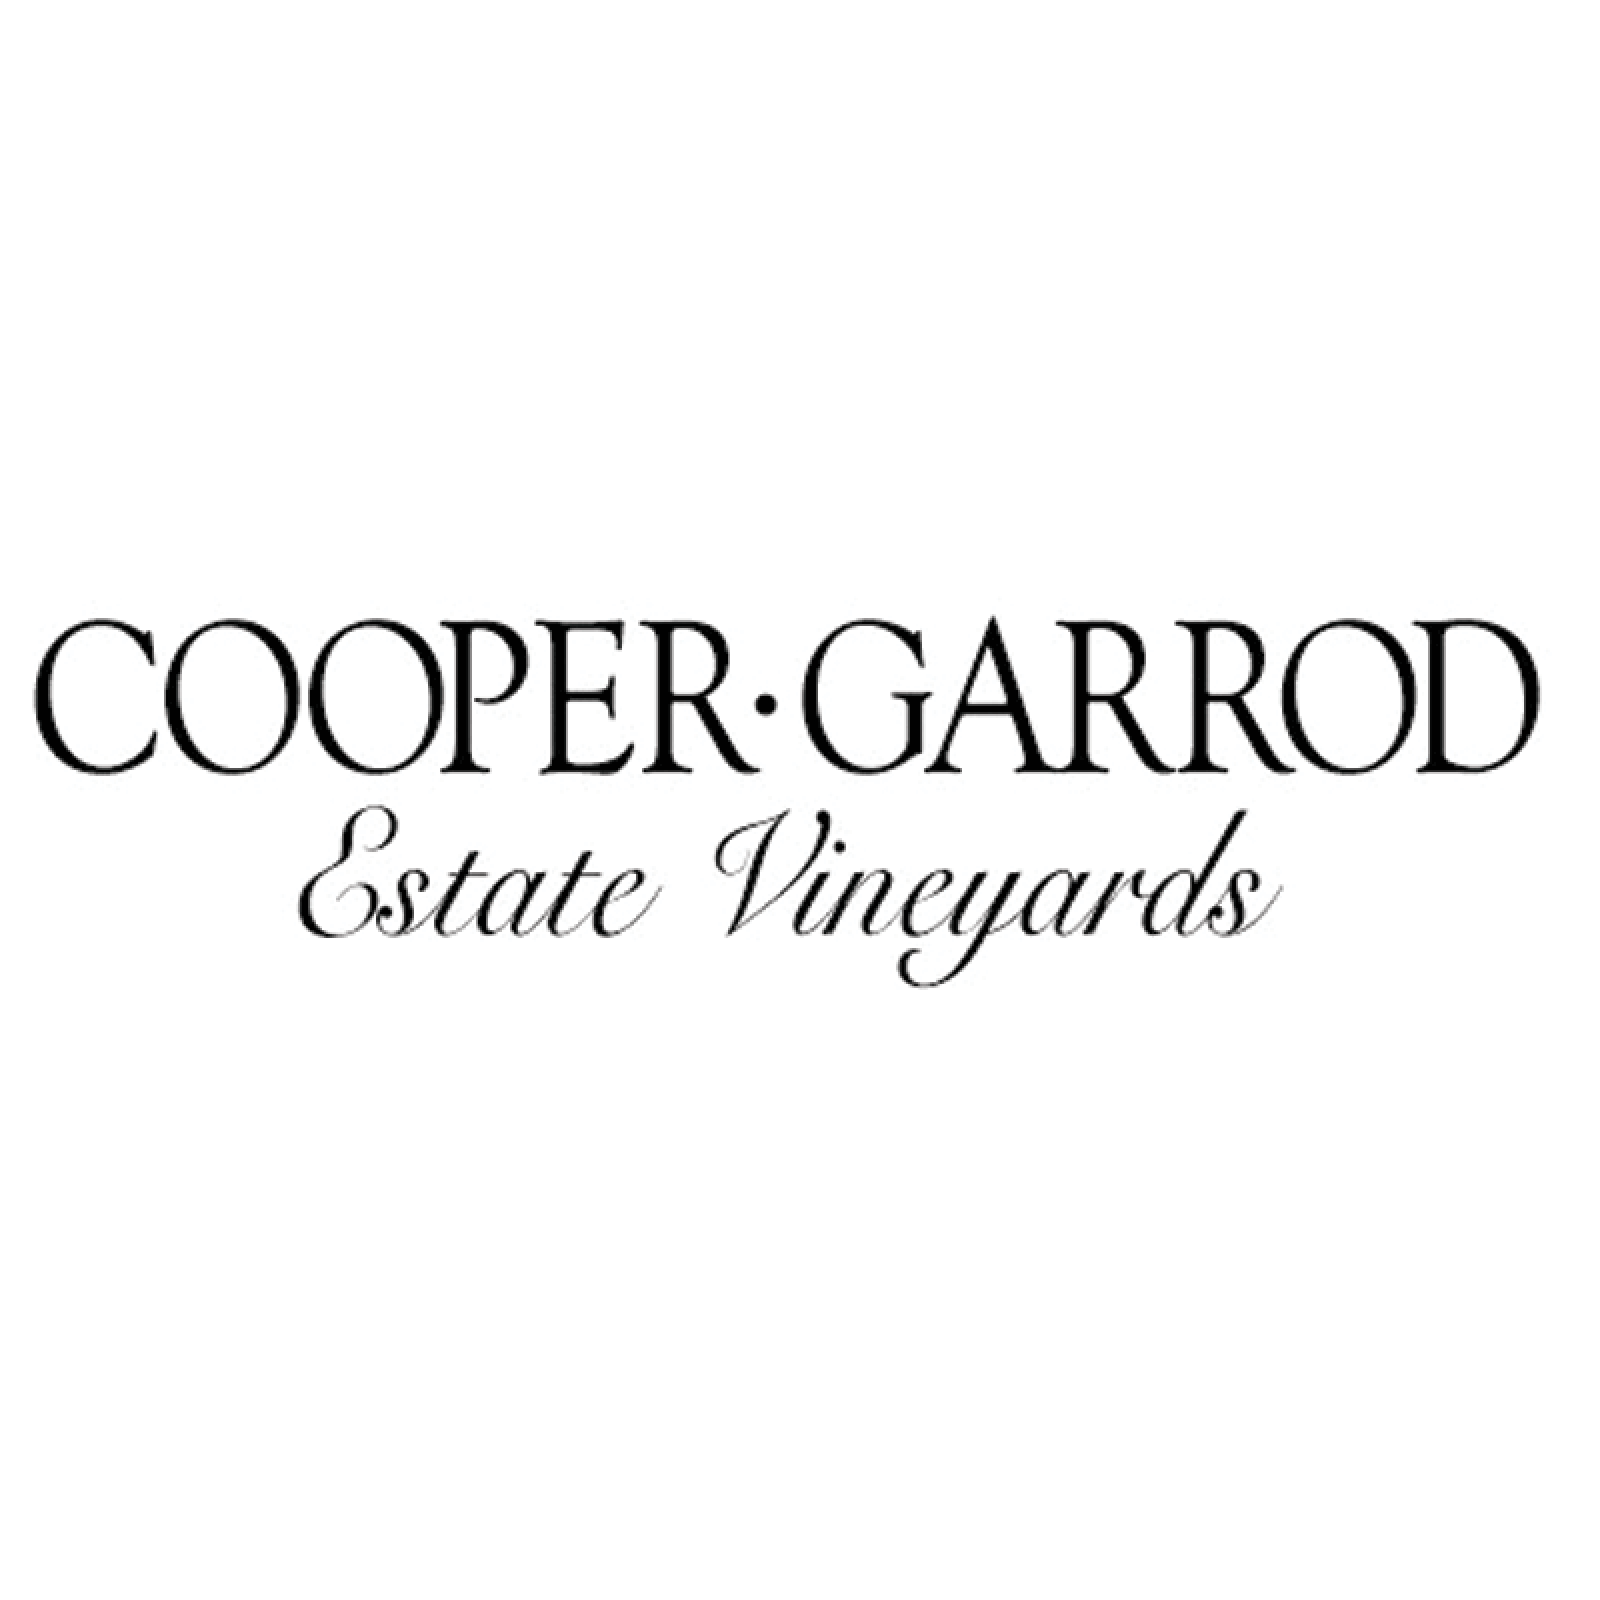 Cooper Garrod George's Cabernet Sauvignon 2018 Wine Label 